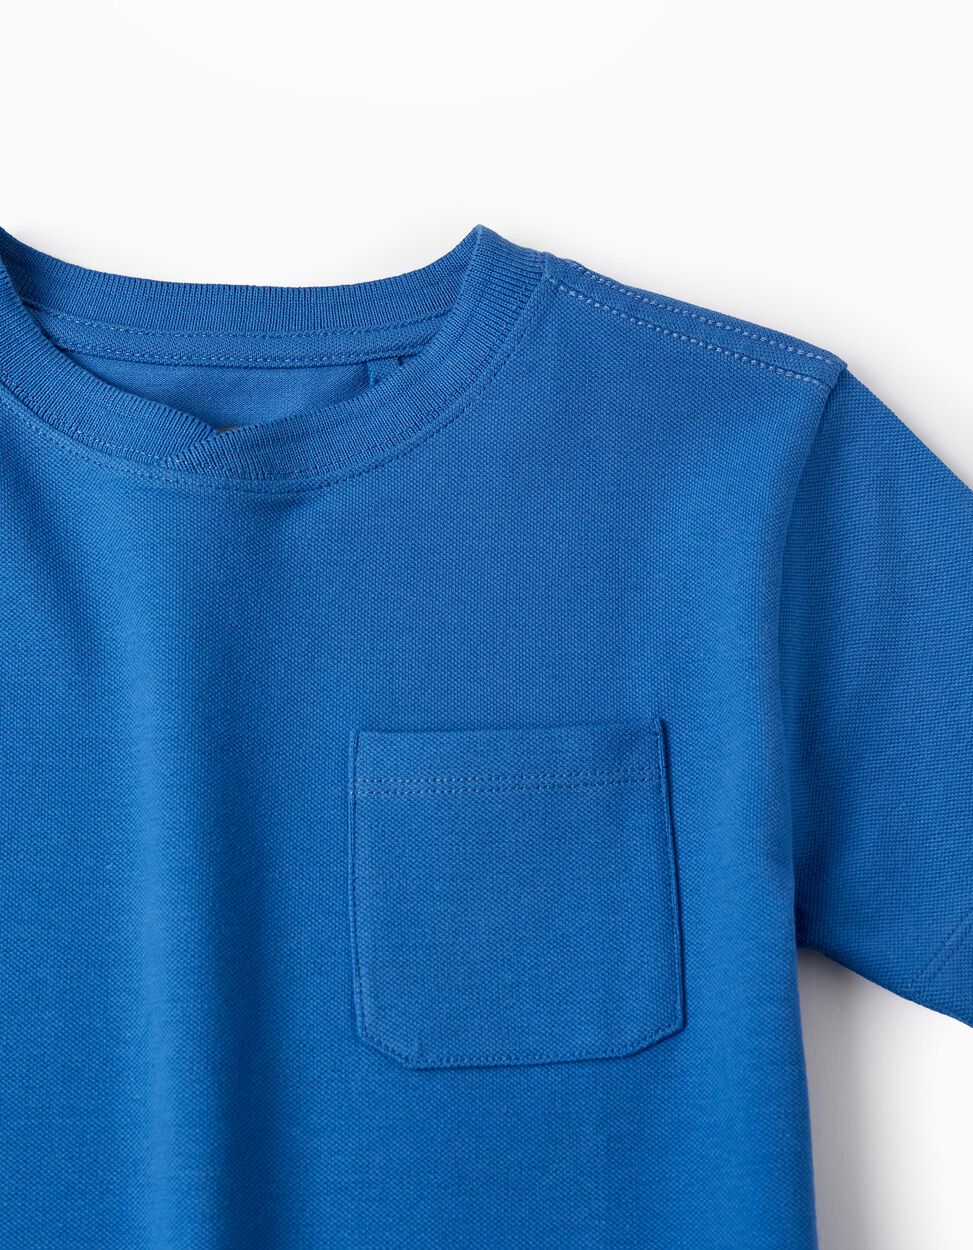 Buy Online Short-Sleeved T-Shirt in Cotton Piqué for Boys, Blue